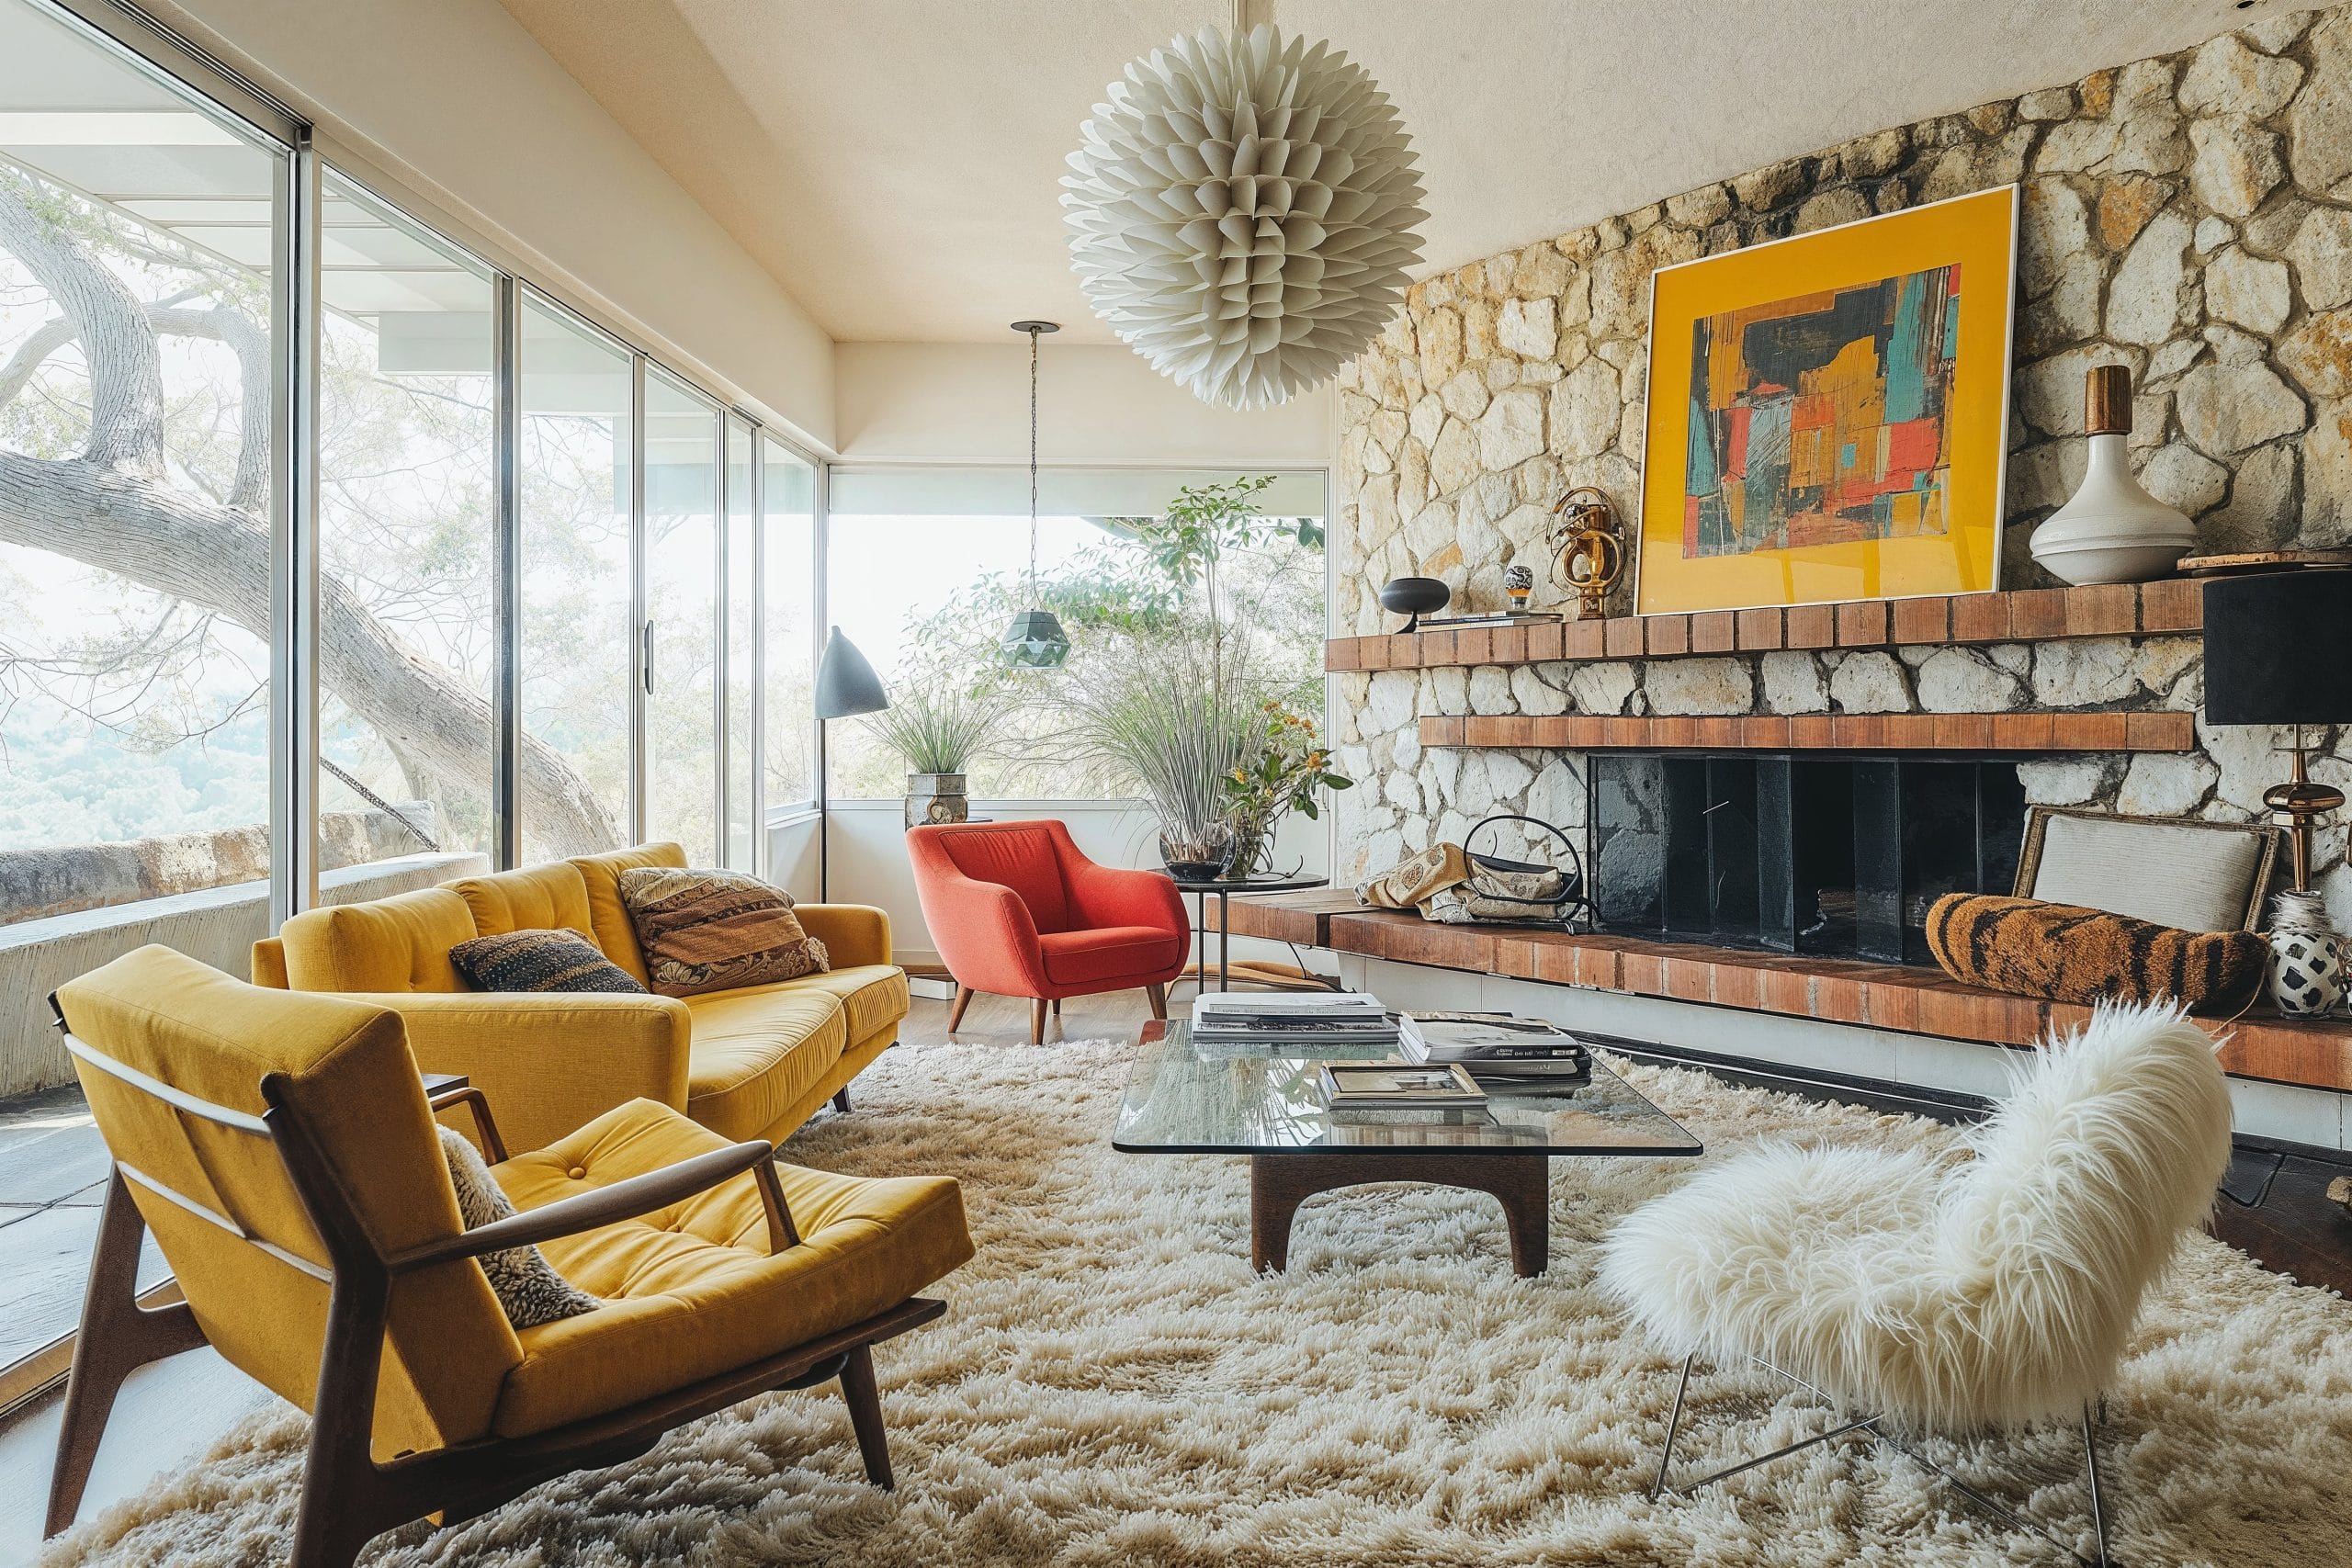 Top 12 Minimalist Home Decor Ideas for a Simplified Look - Decorilla Online  Interior Design